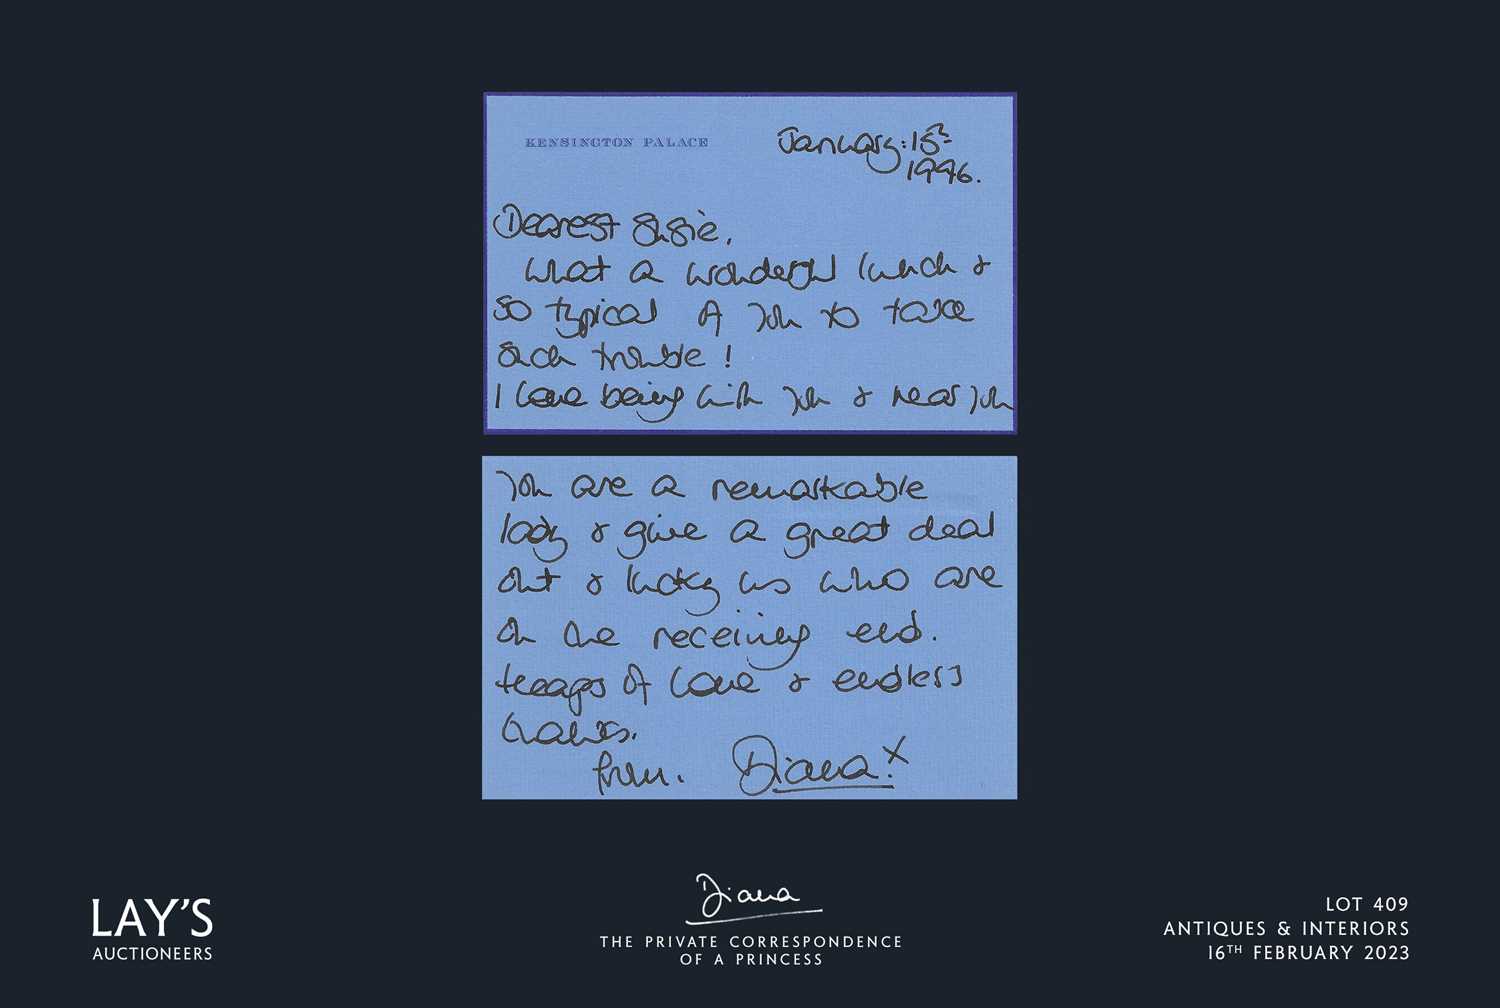 Lot 409 - Diana - The Private Correspondence of a Princess